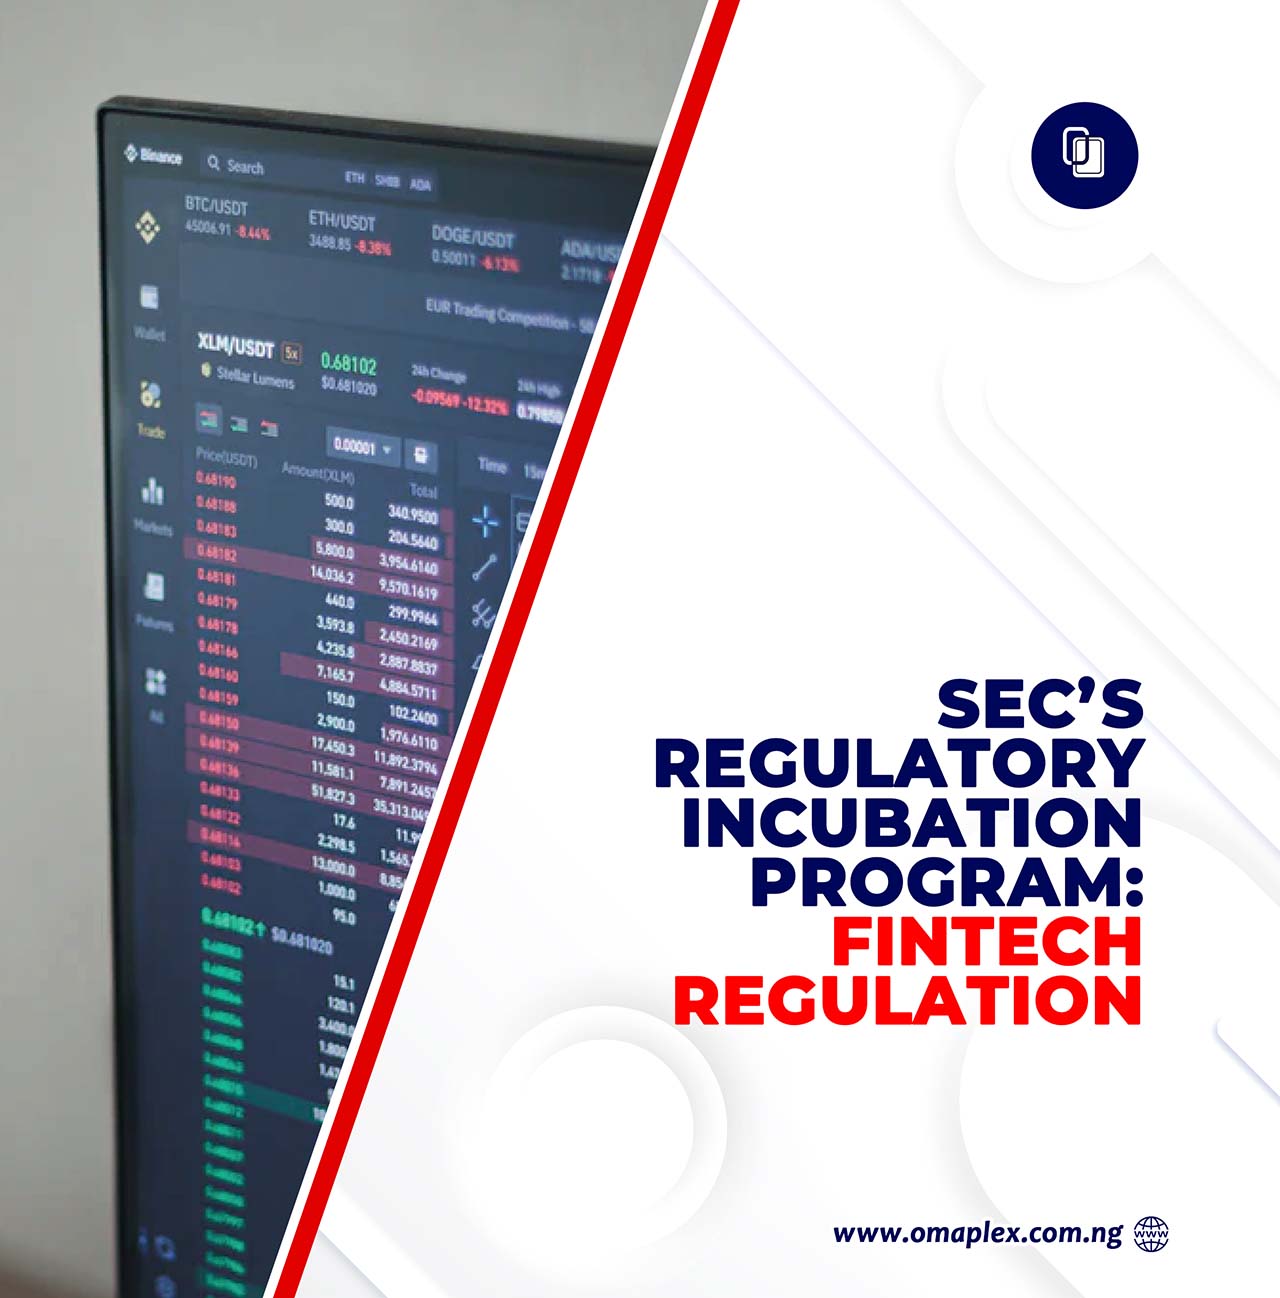 SEC’s Regulatory Incubation Program - Fintech Regulation